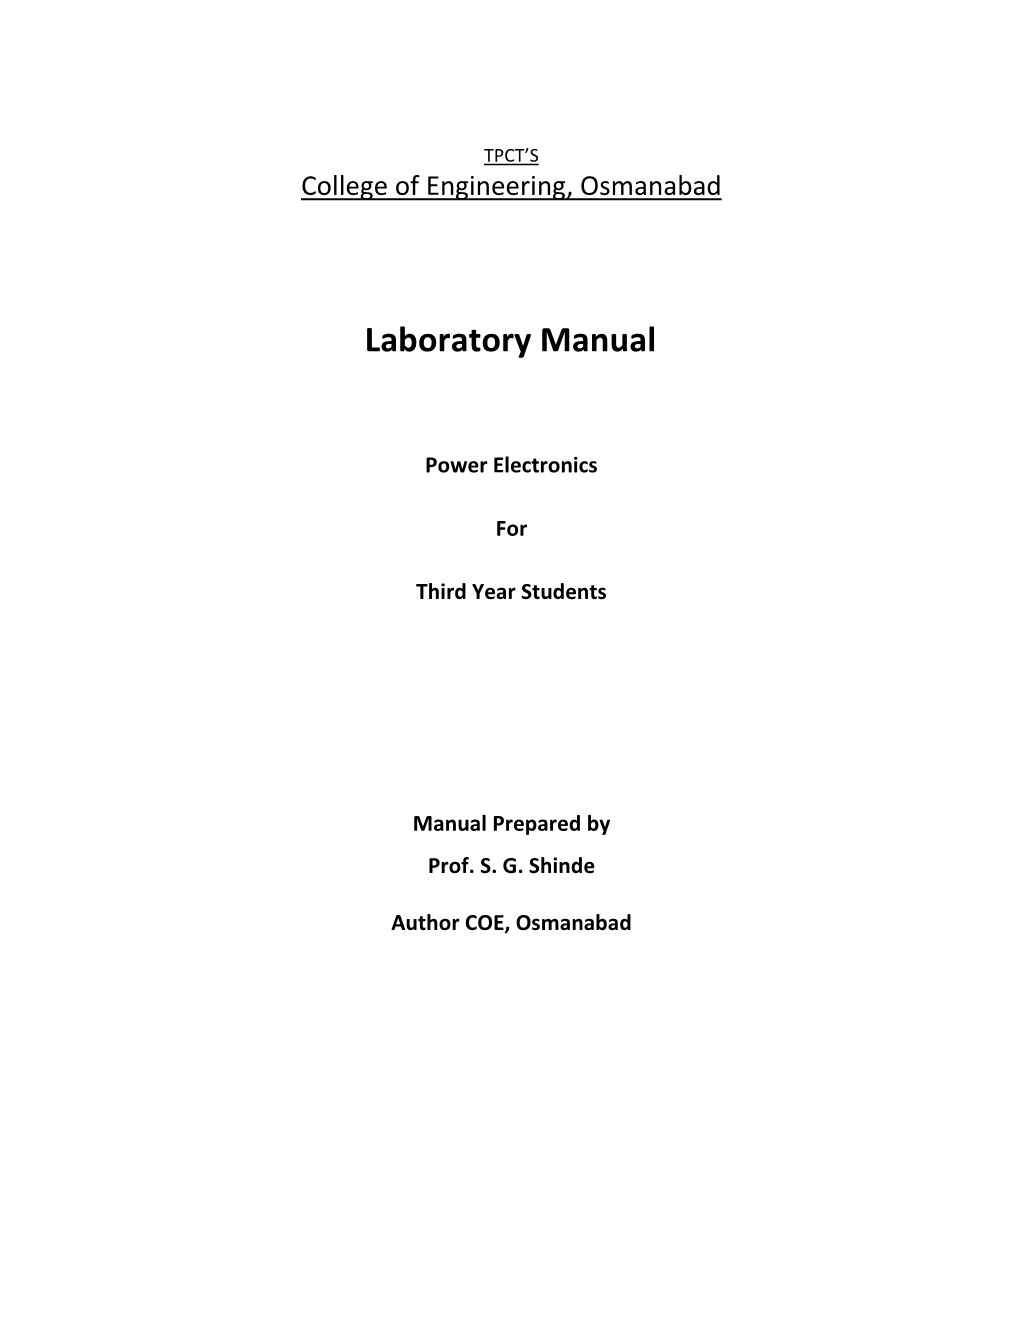 Laboratory Manual